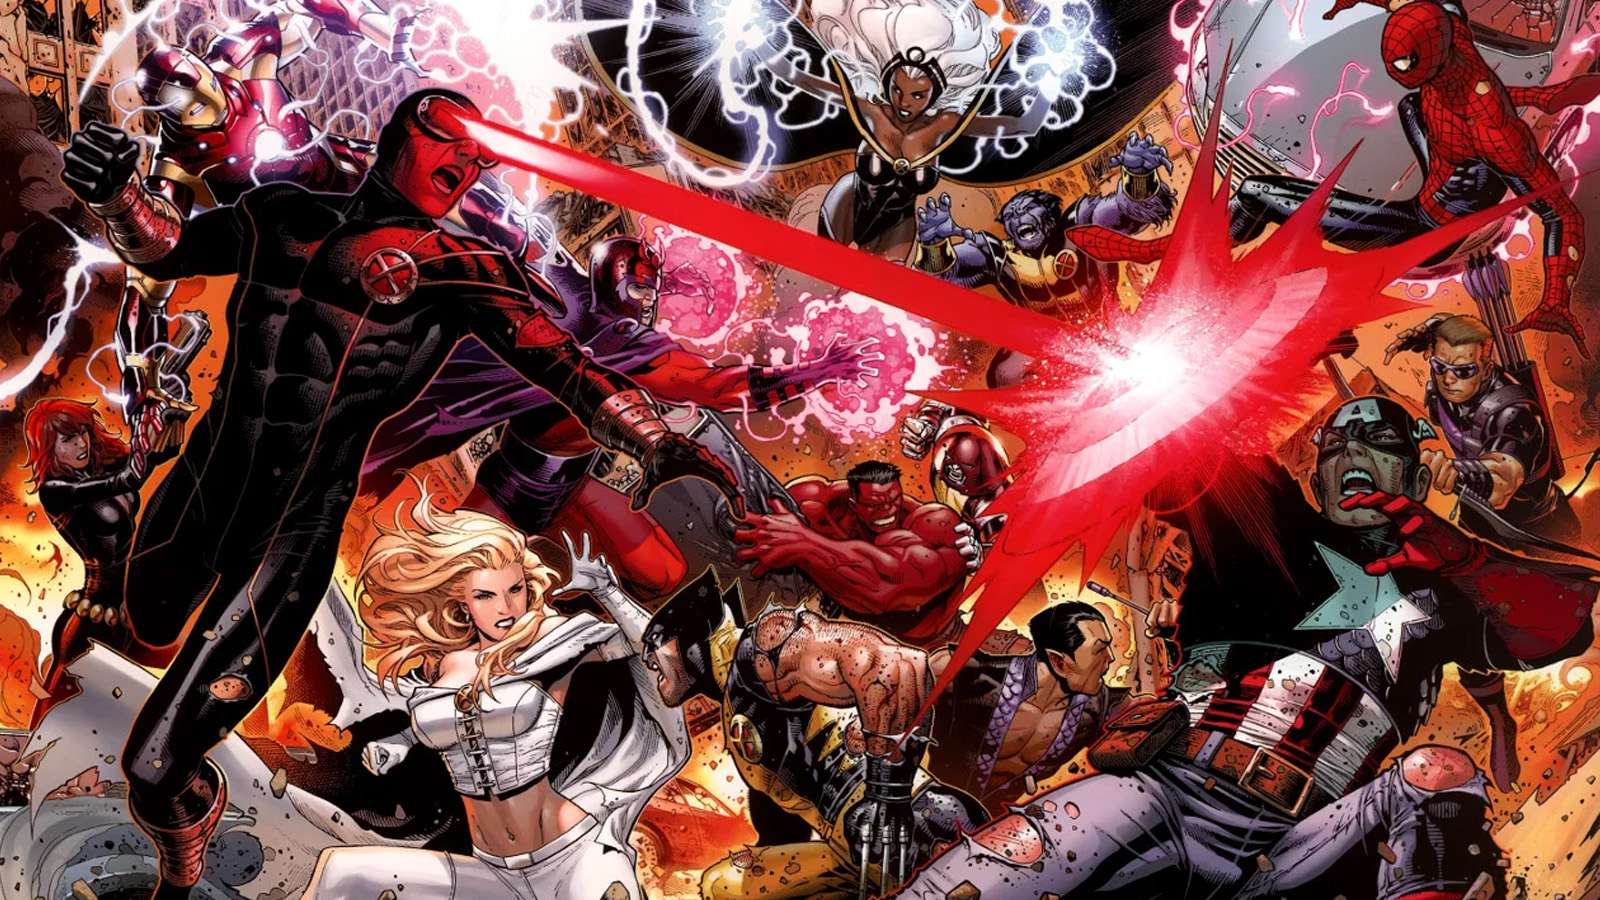 Splash art from the Avengers vs X-Men crossover specials